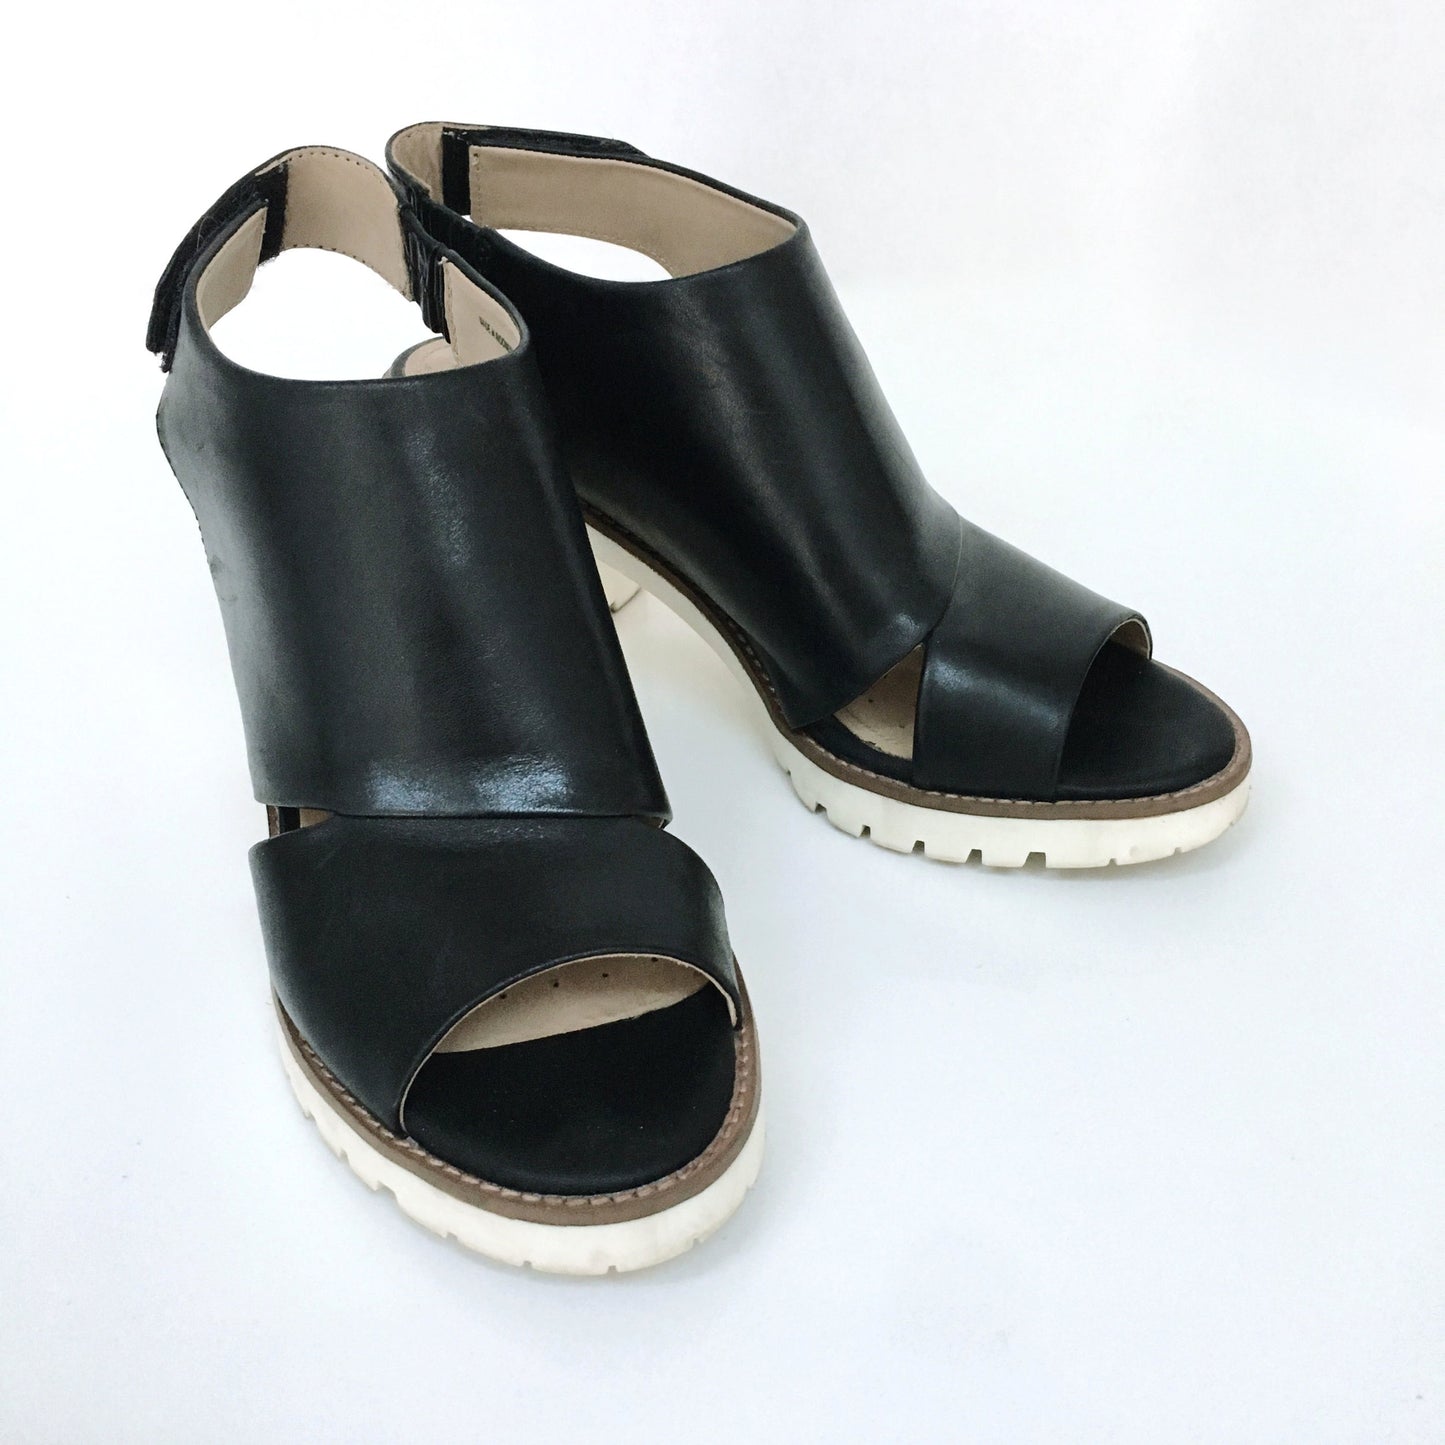 Geox Dovelyn Block Heel Sandals - size 38